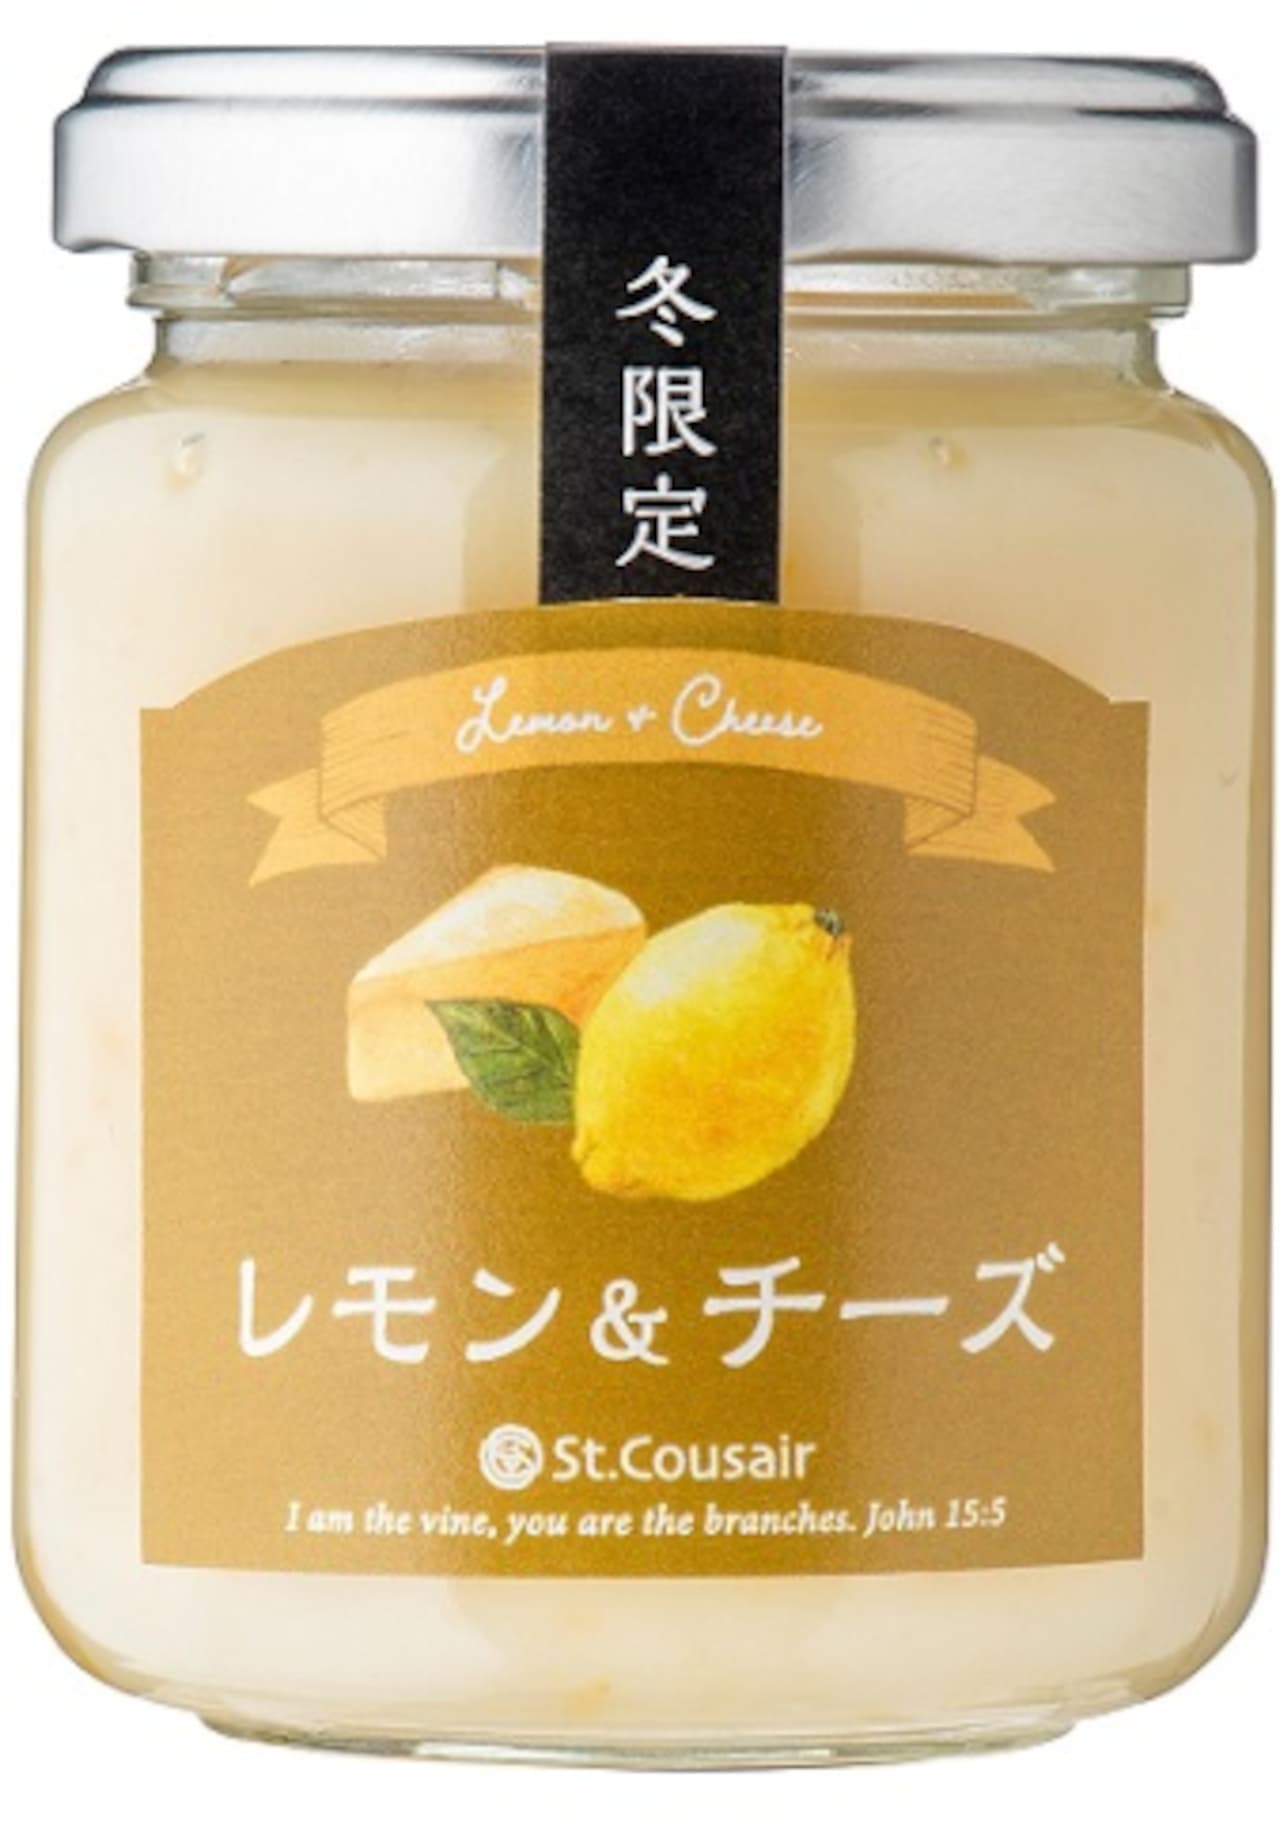 Sankuzeru "Winter 21 Limited Jam Salt Caramel" "Winter 21 Limited Jam Raspberry Chocolate" "Winter 21 Limited Jam Lemon & Cheese"